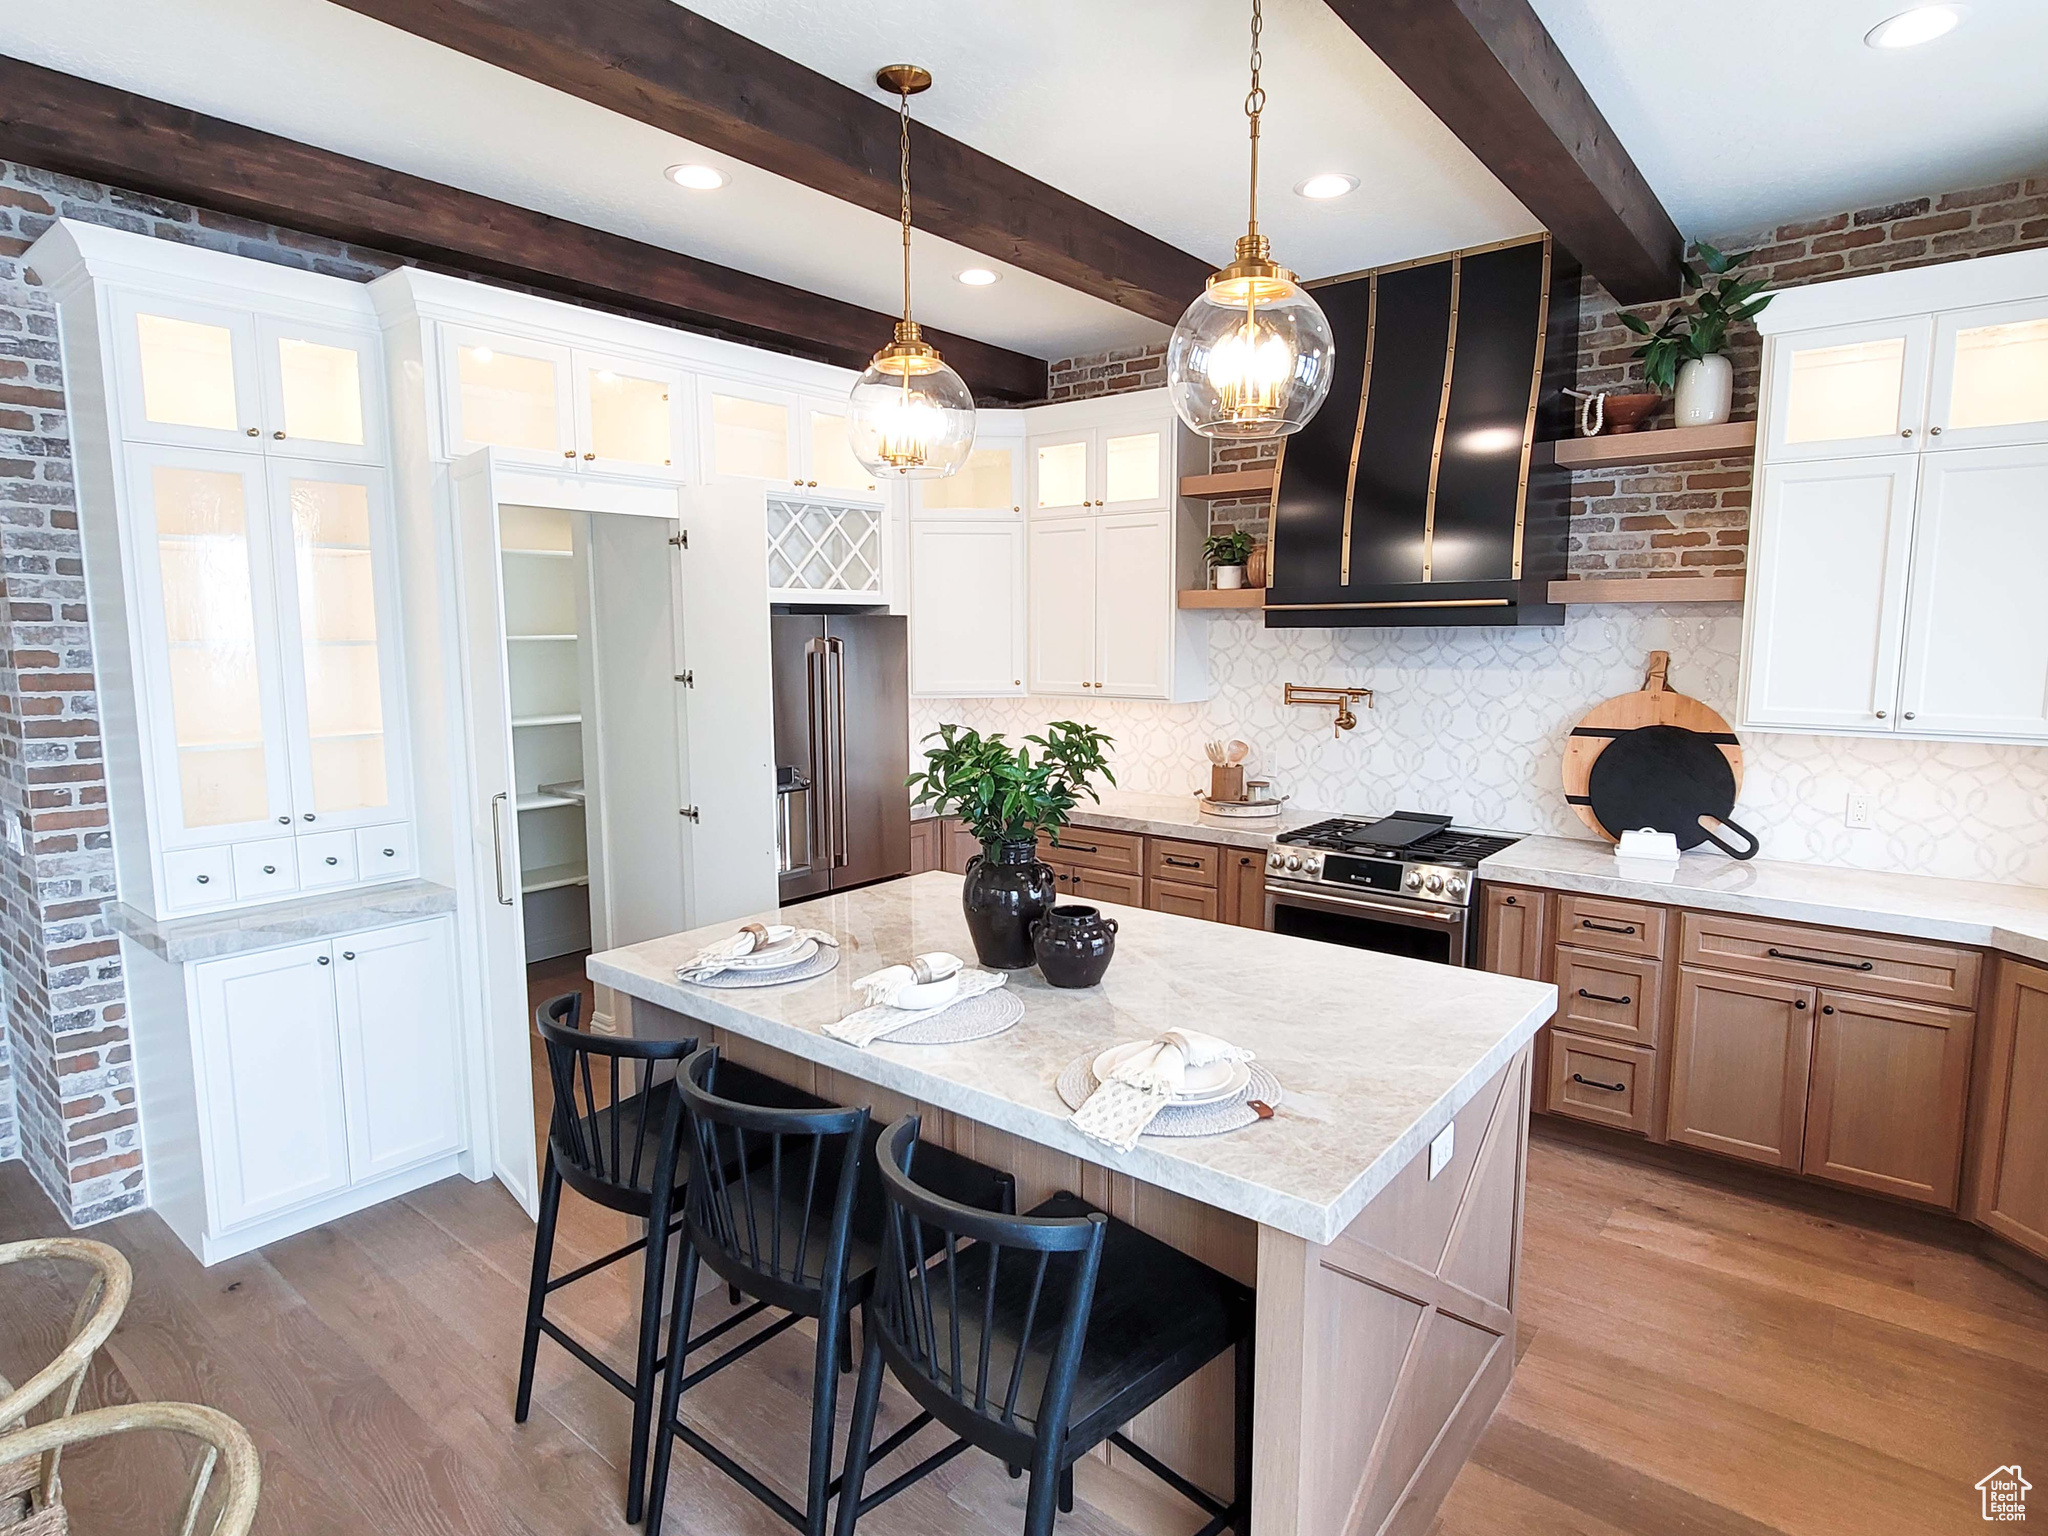 Kitchen with a kitchen island, tasteful backsplash, wood-type flooring, and stainless steel appliances